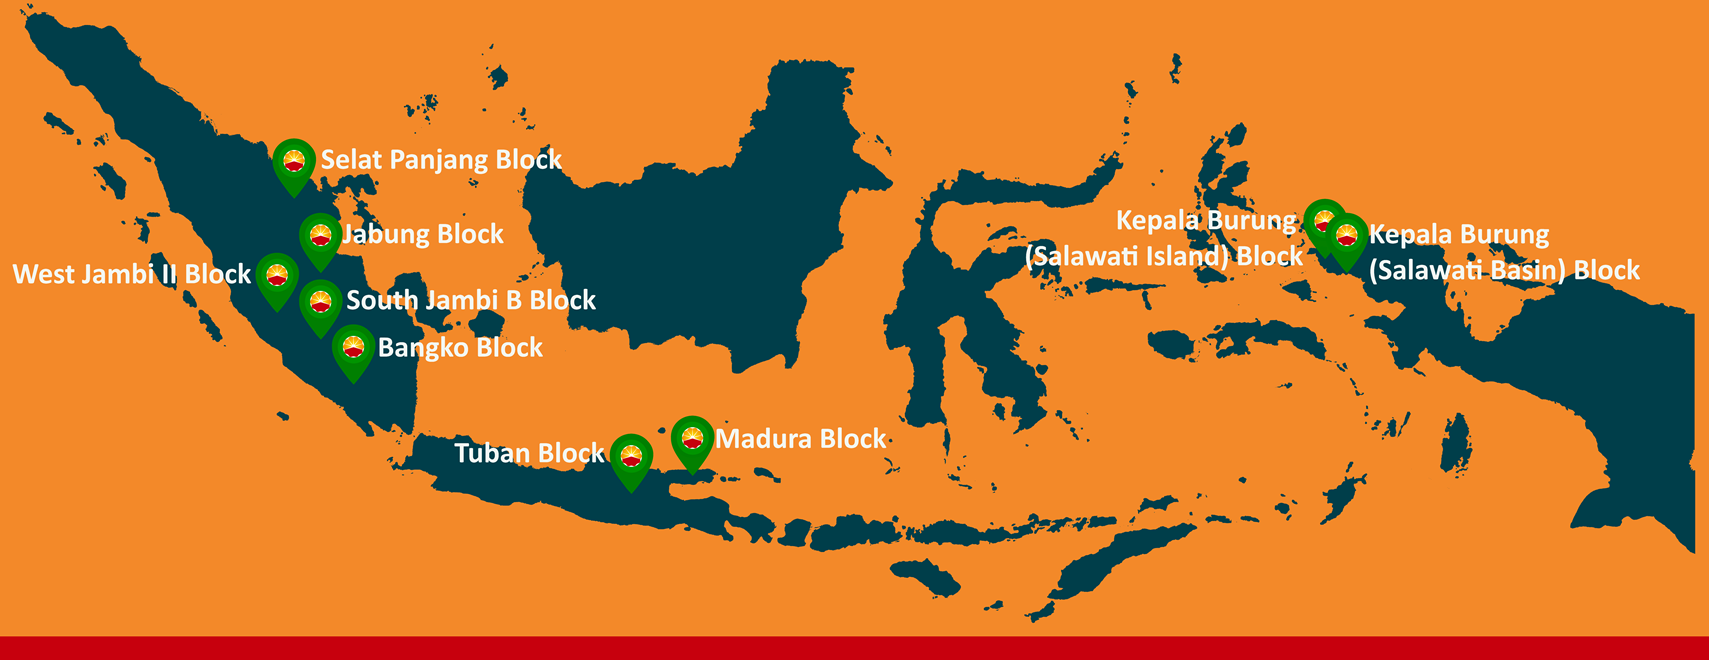 PetroChina's working areas in Indonesia (Credit: PetroChina)